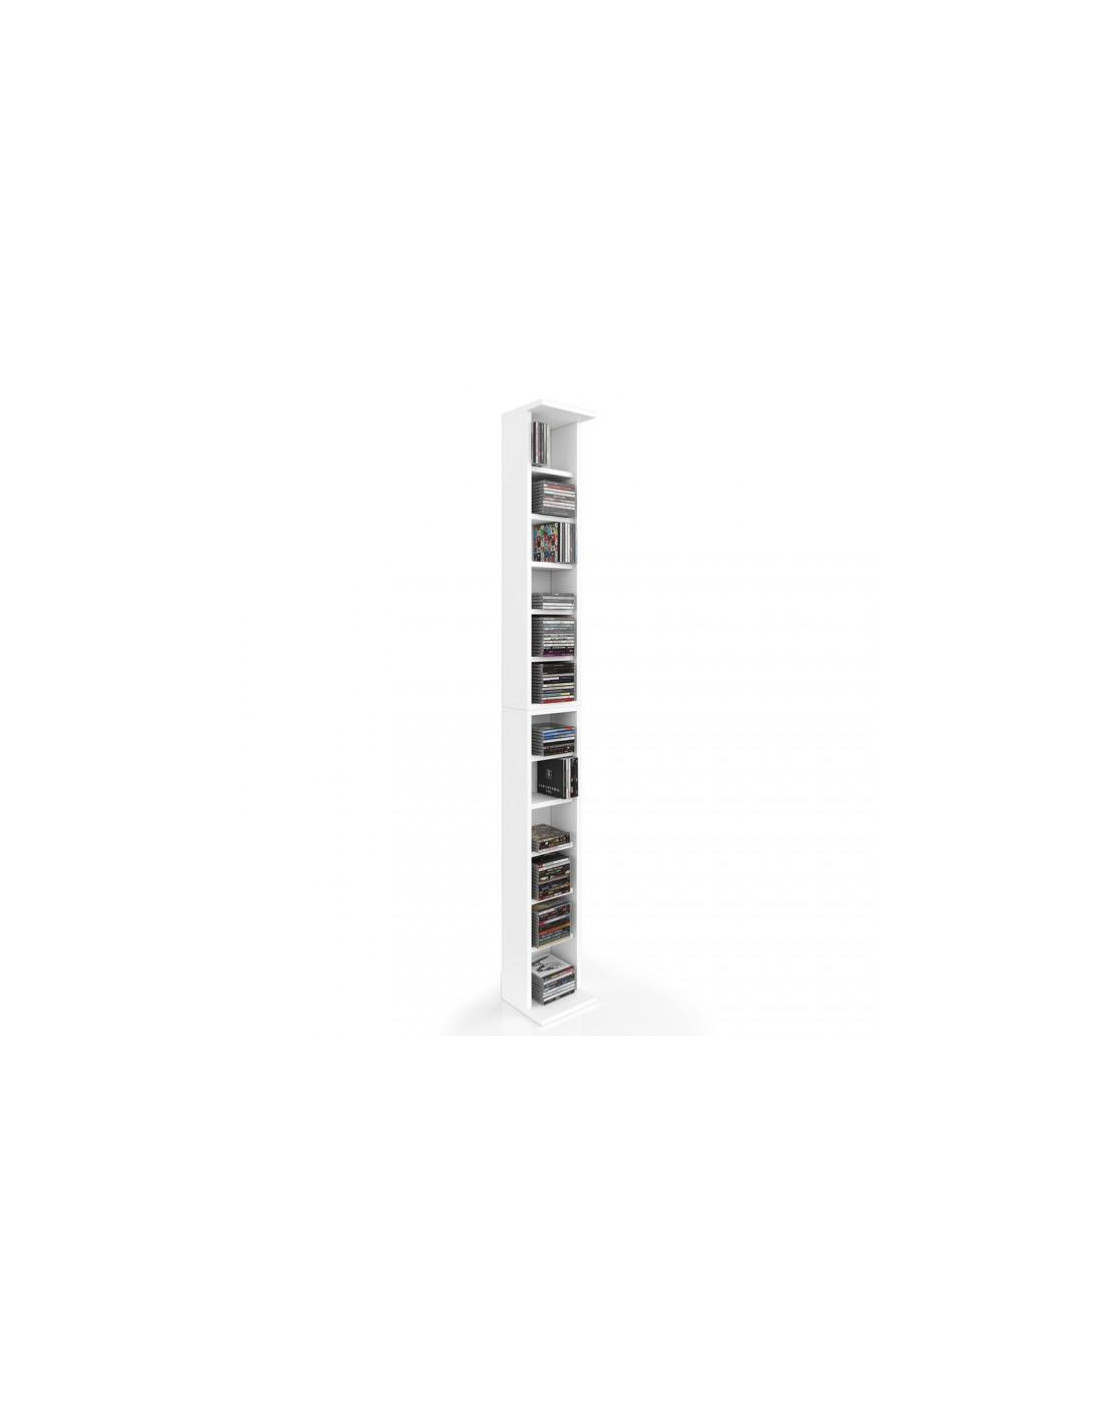 Meubles d'armoire de rangement en rack CD DVD